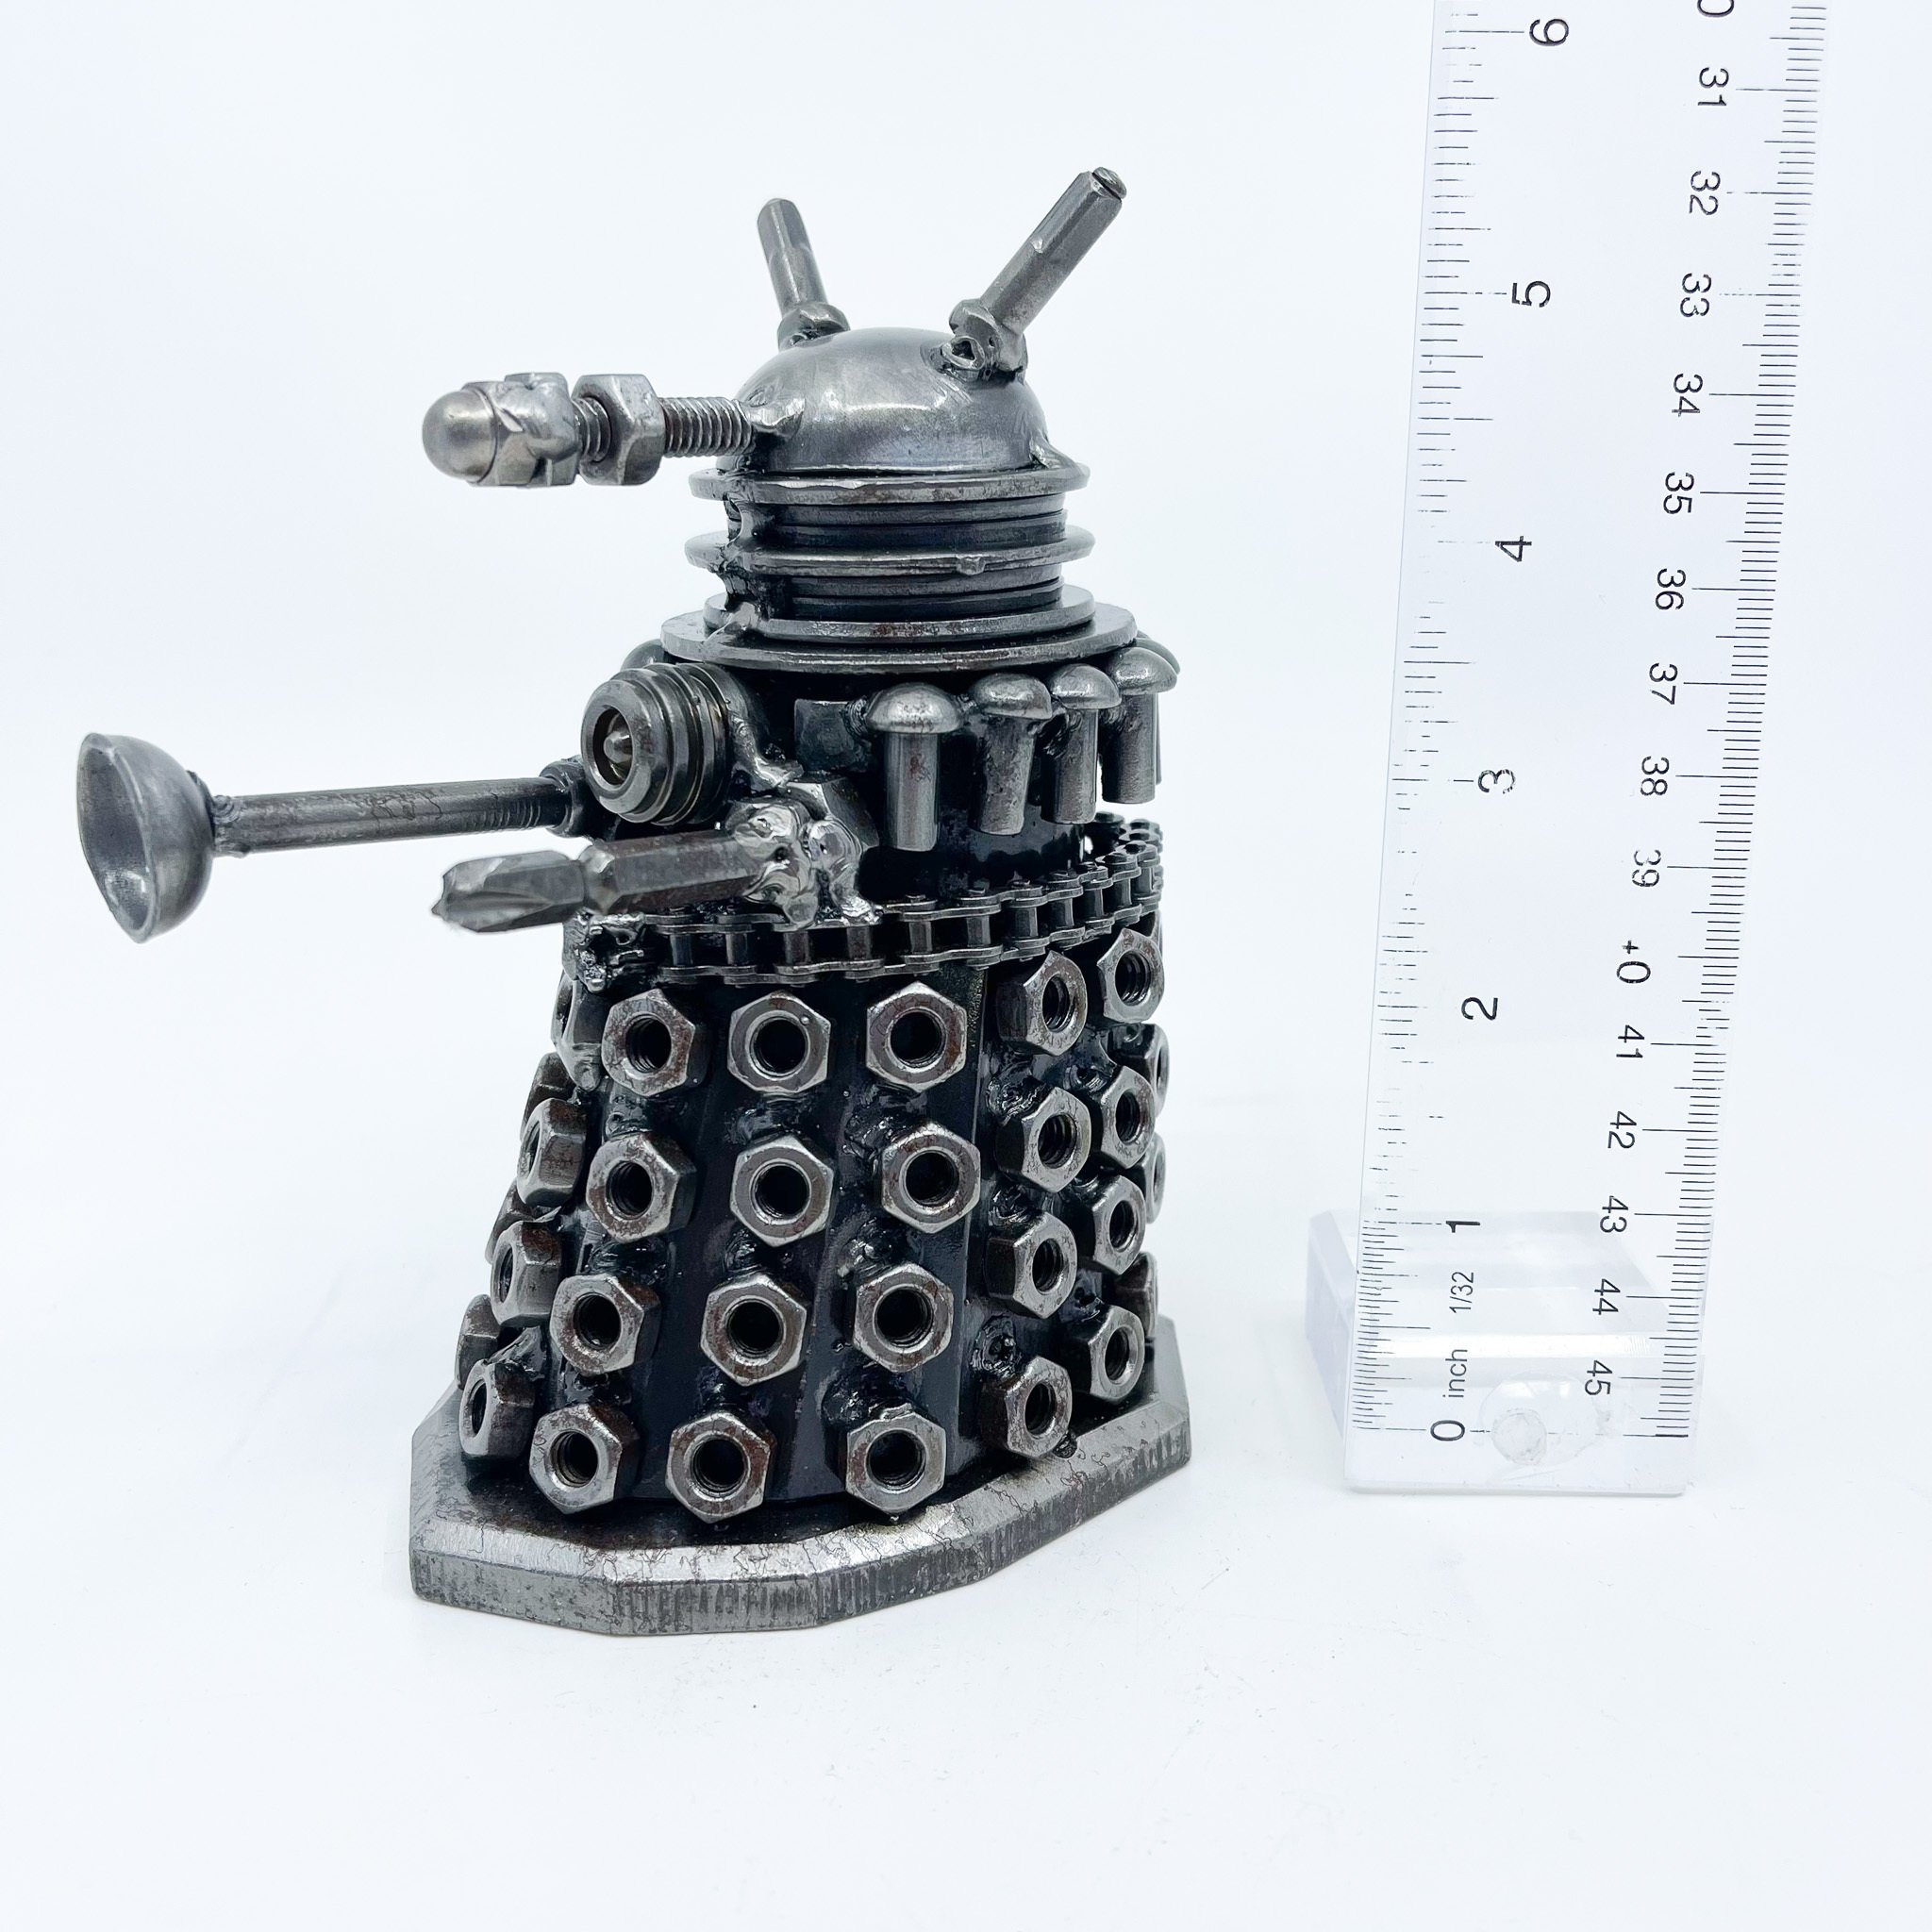 Dr.Who Dalek Figurine